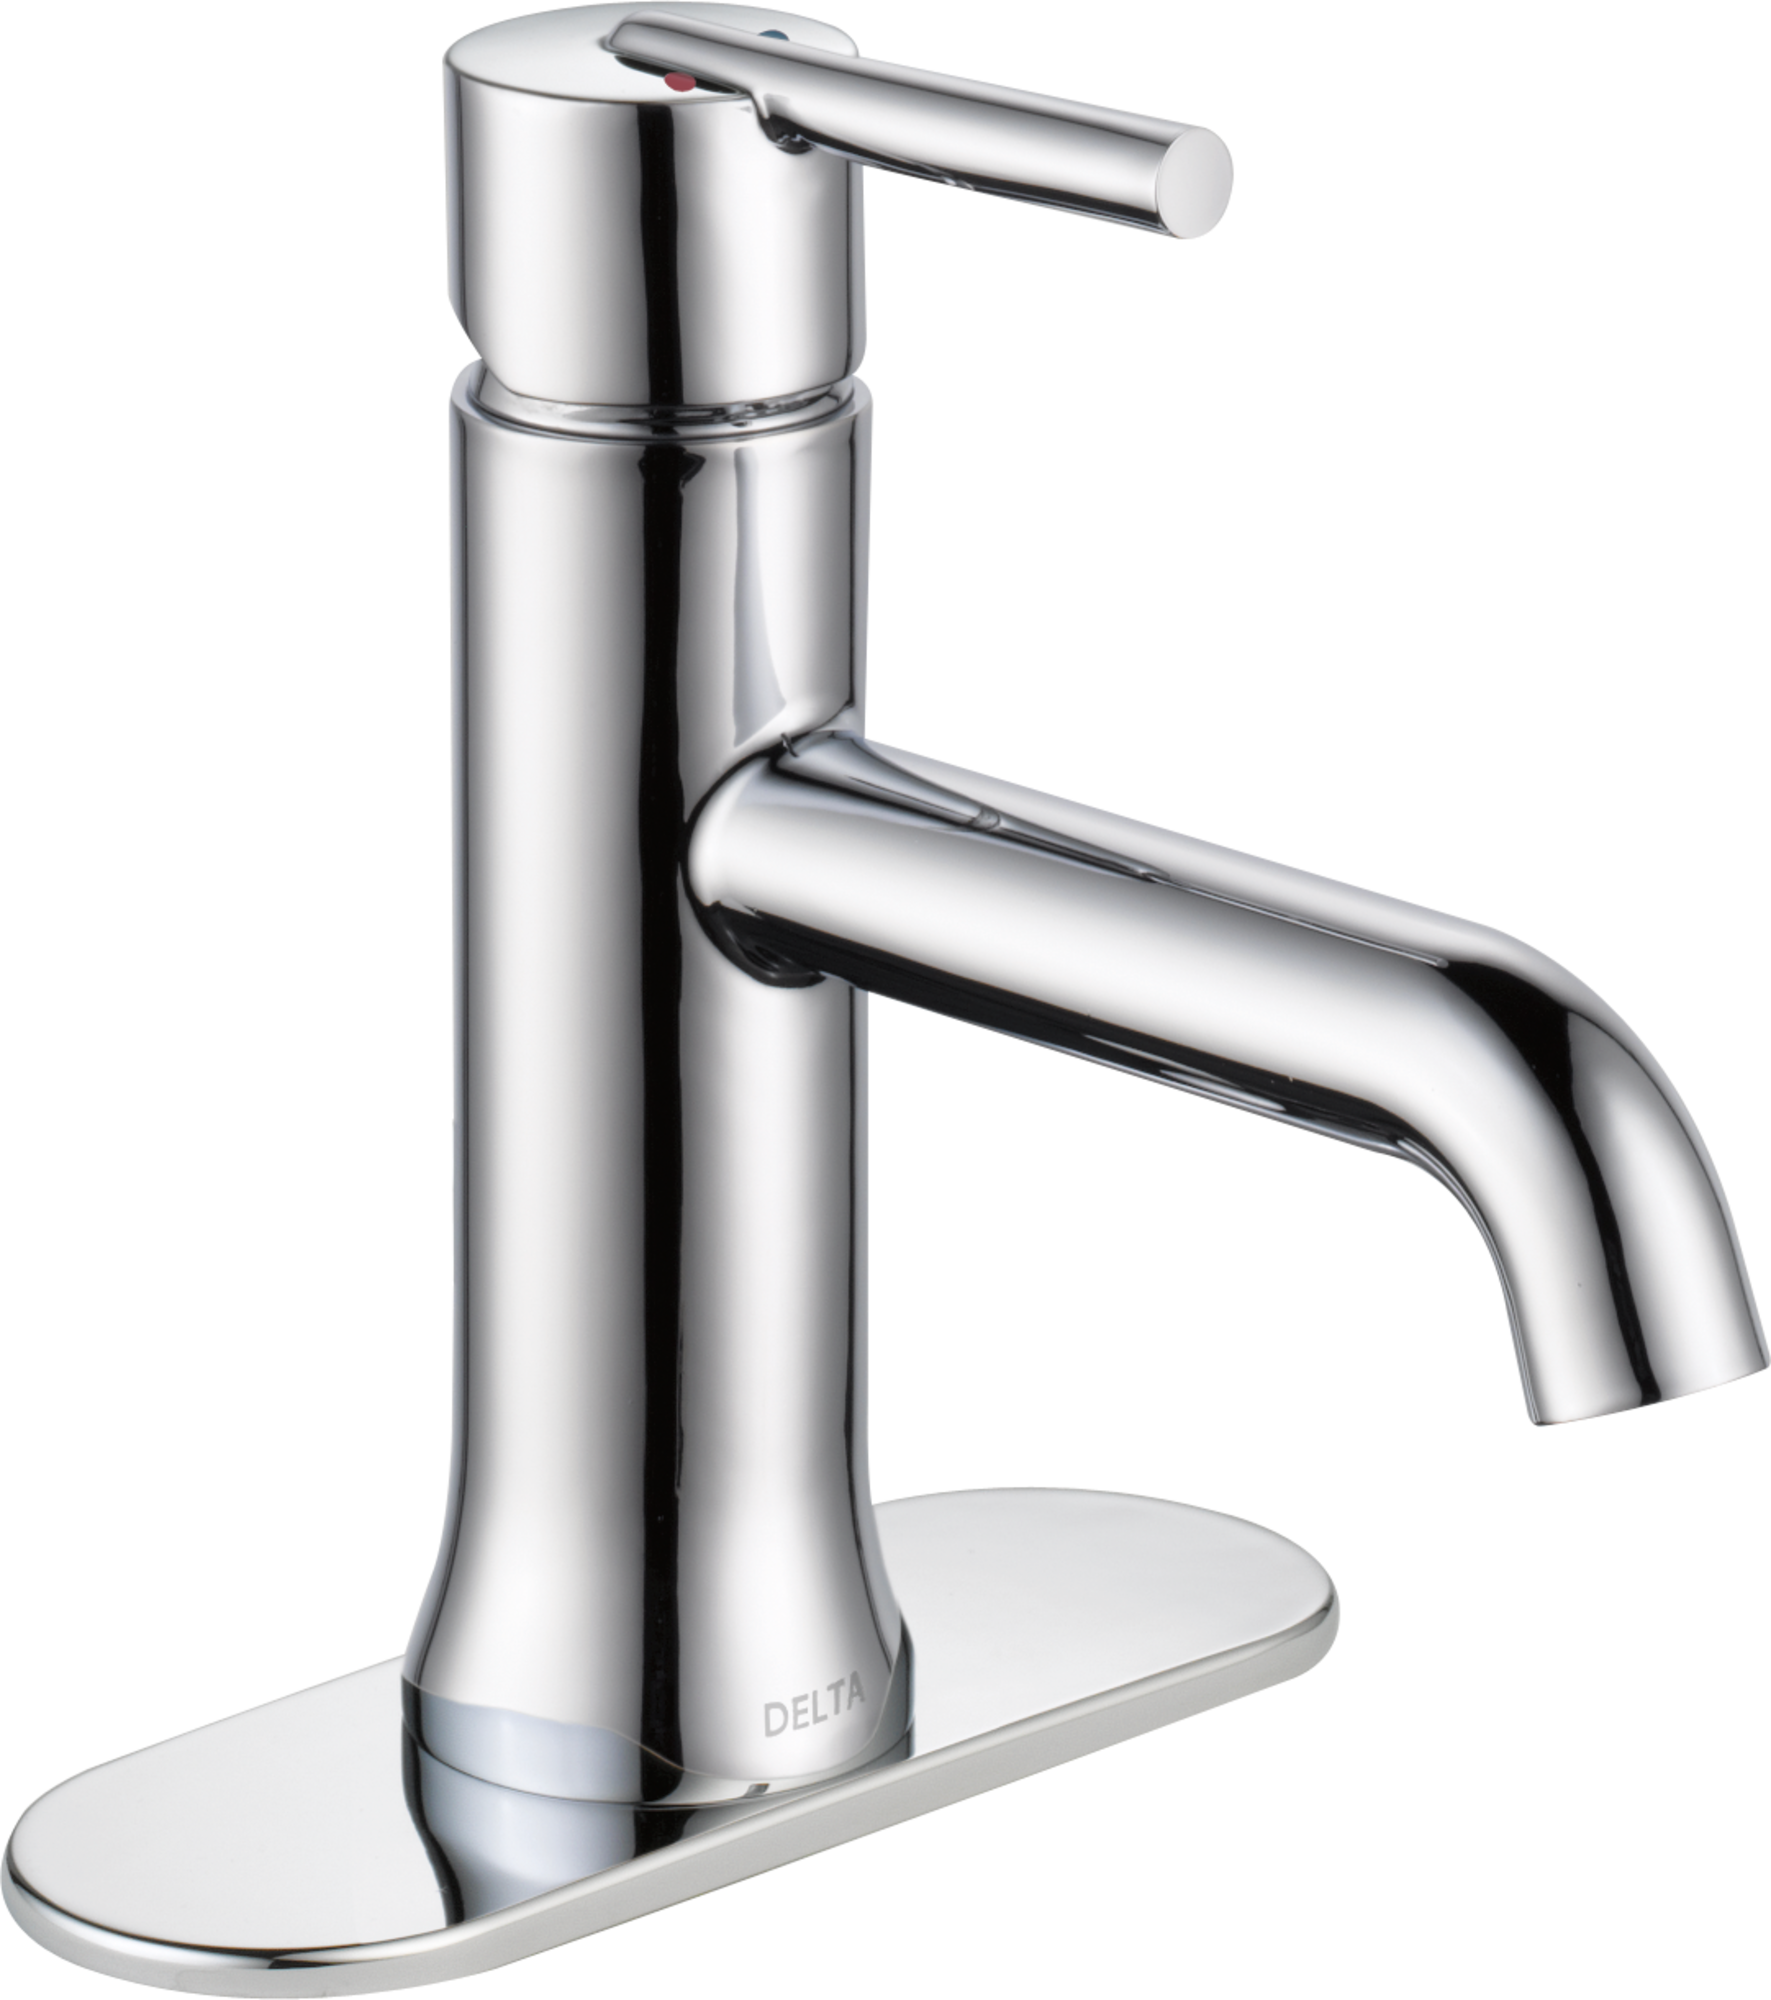 Delta Trinsic Single Handle Bathroom Faucet Less Pop-Up Certified Refurbished